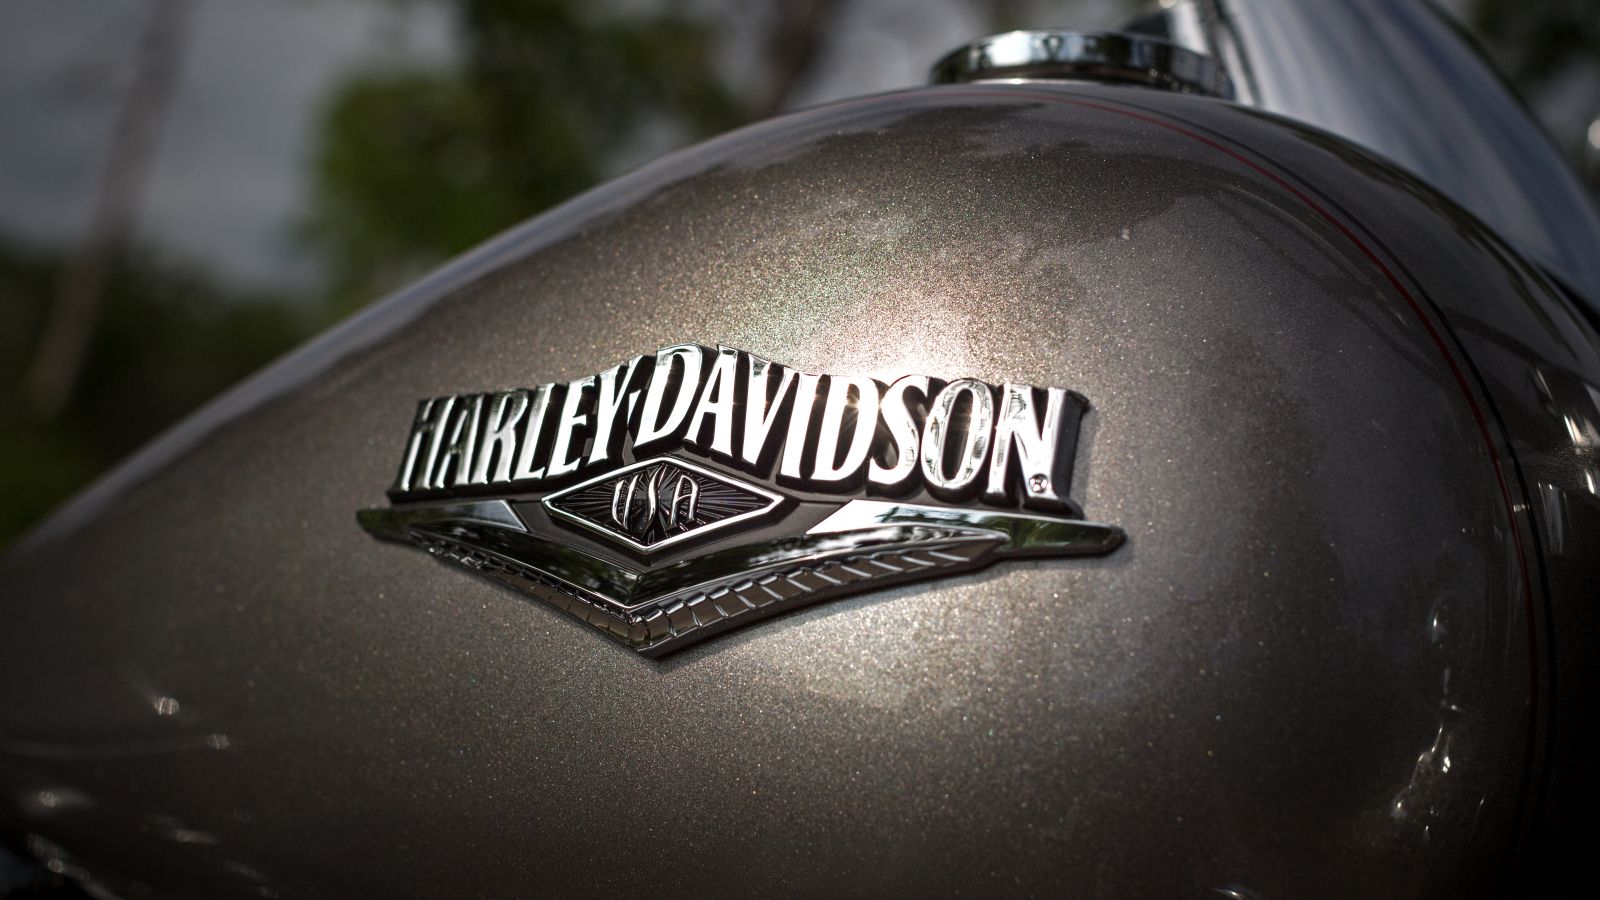 2015 - 2016 Harley-Davidson Road King